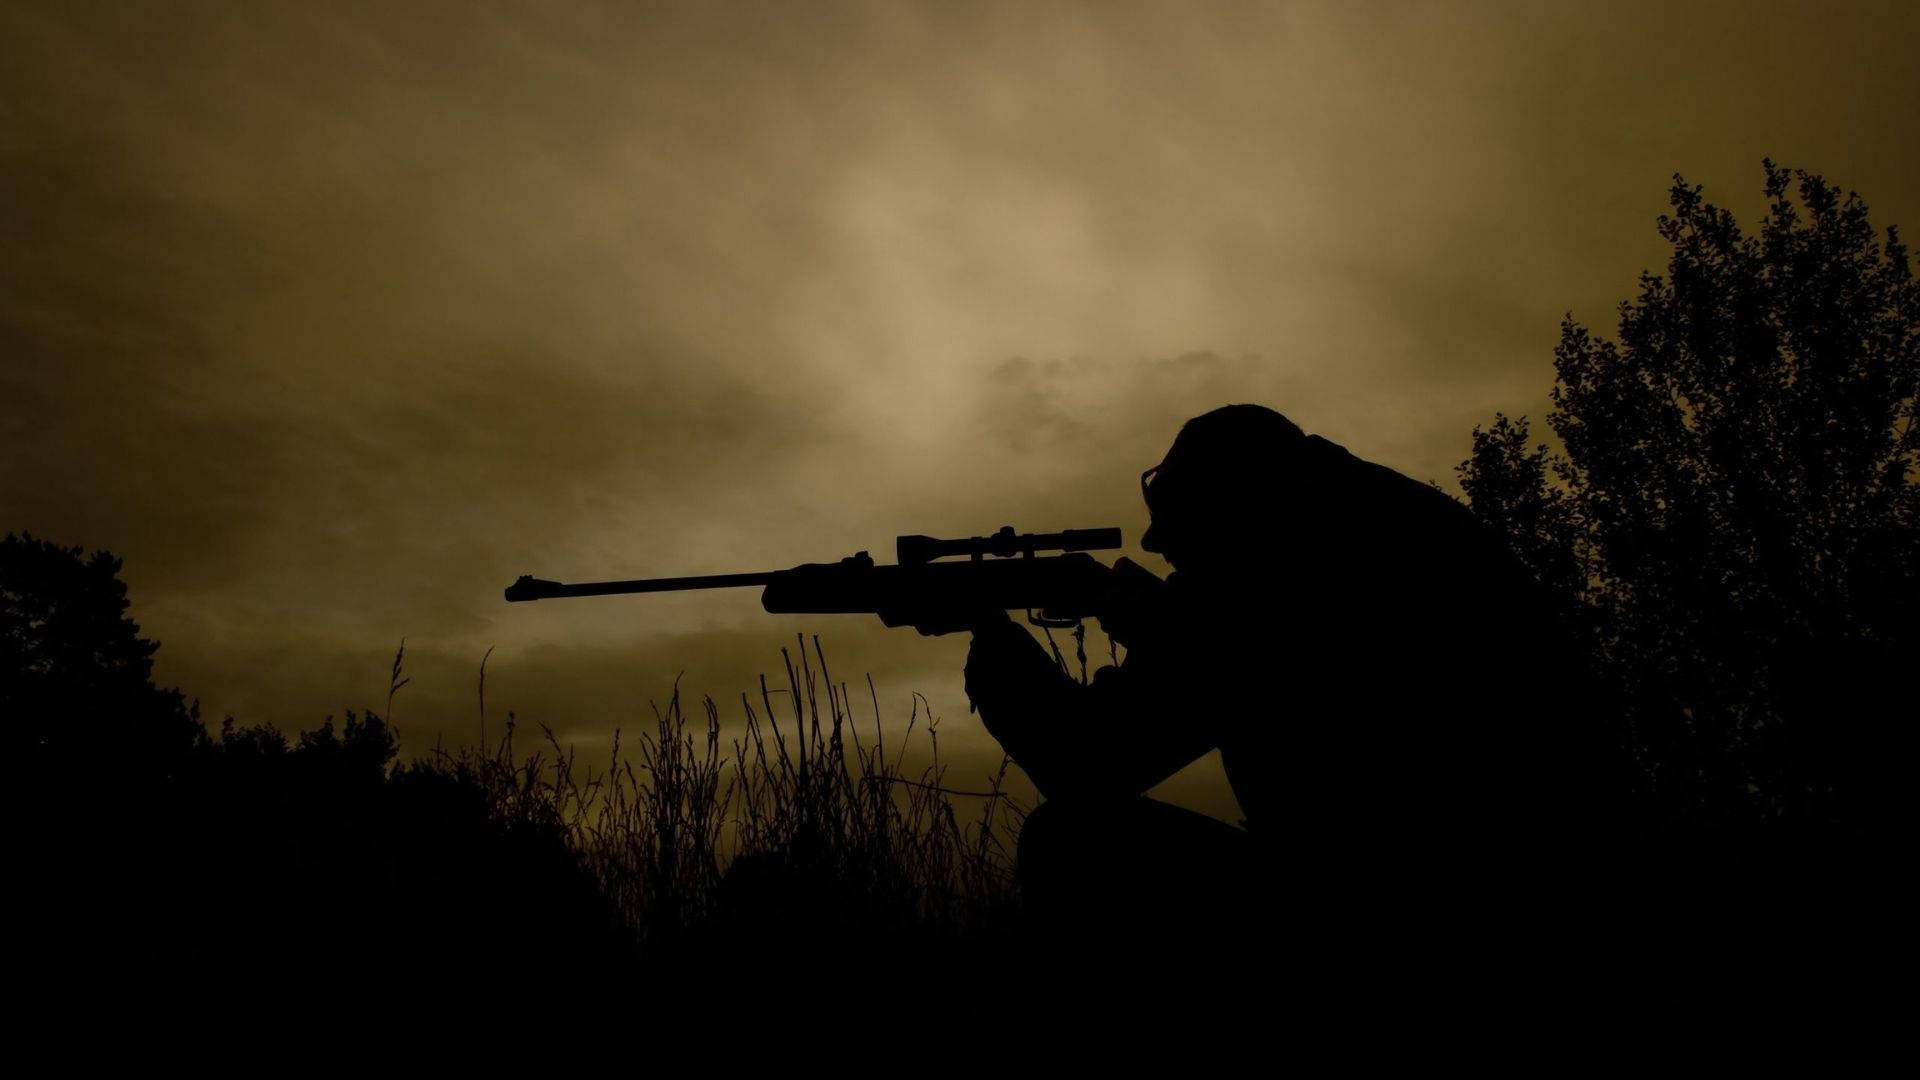 Sniper Soldier Silhouette Wallpaper